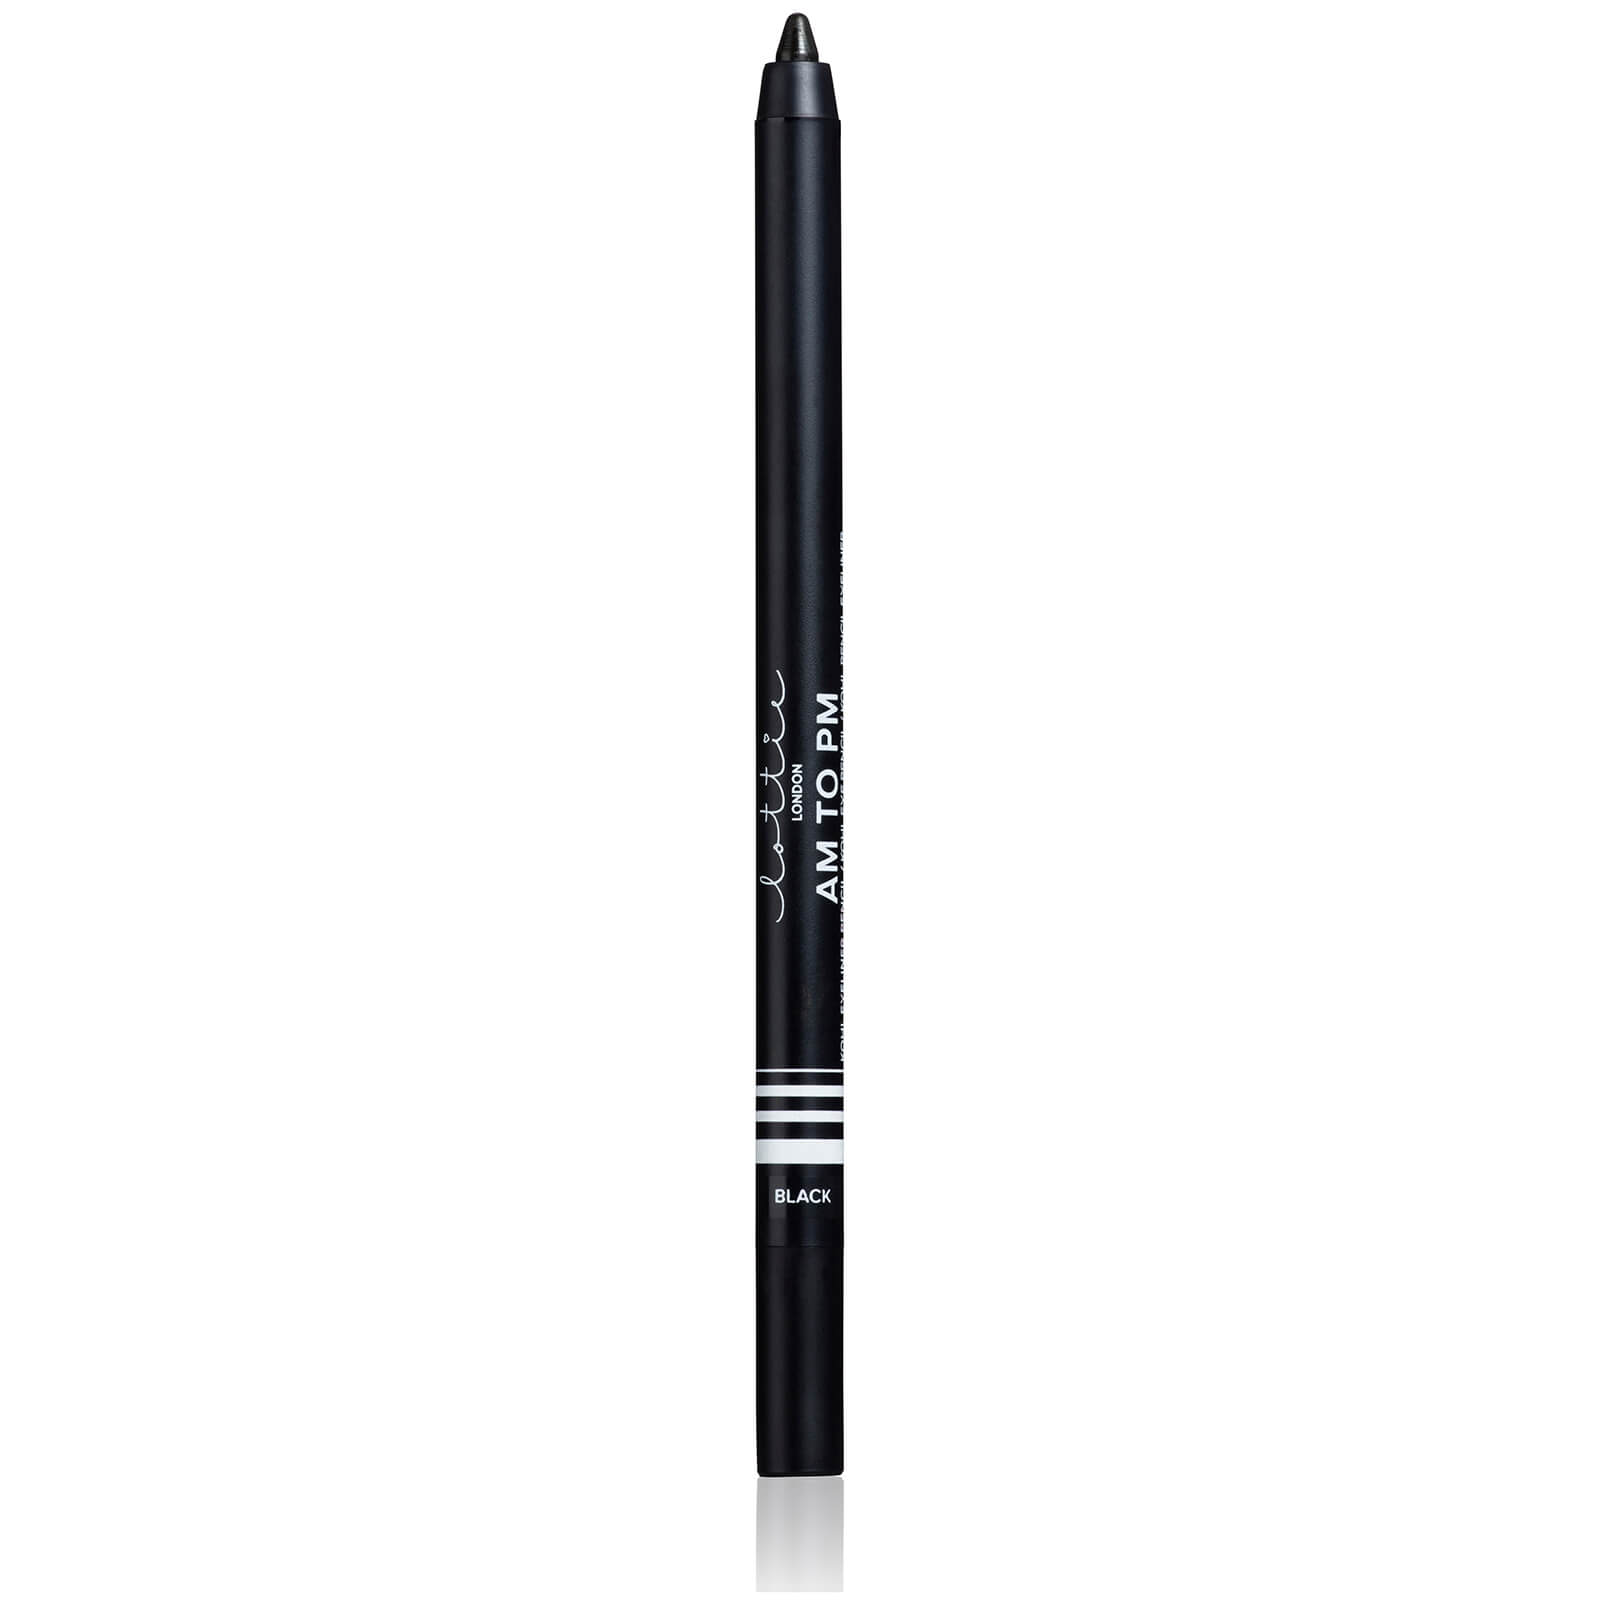 Lottie London Longwear Kohl Eyeliner Pencil 9g (Various Shades) - 0 Black